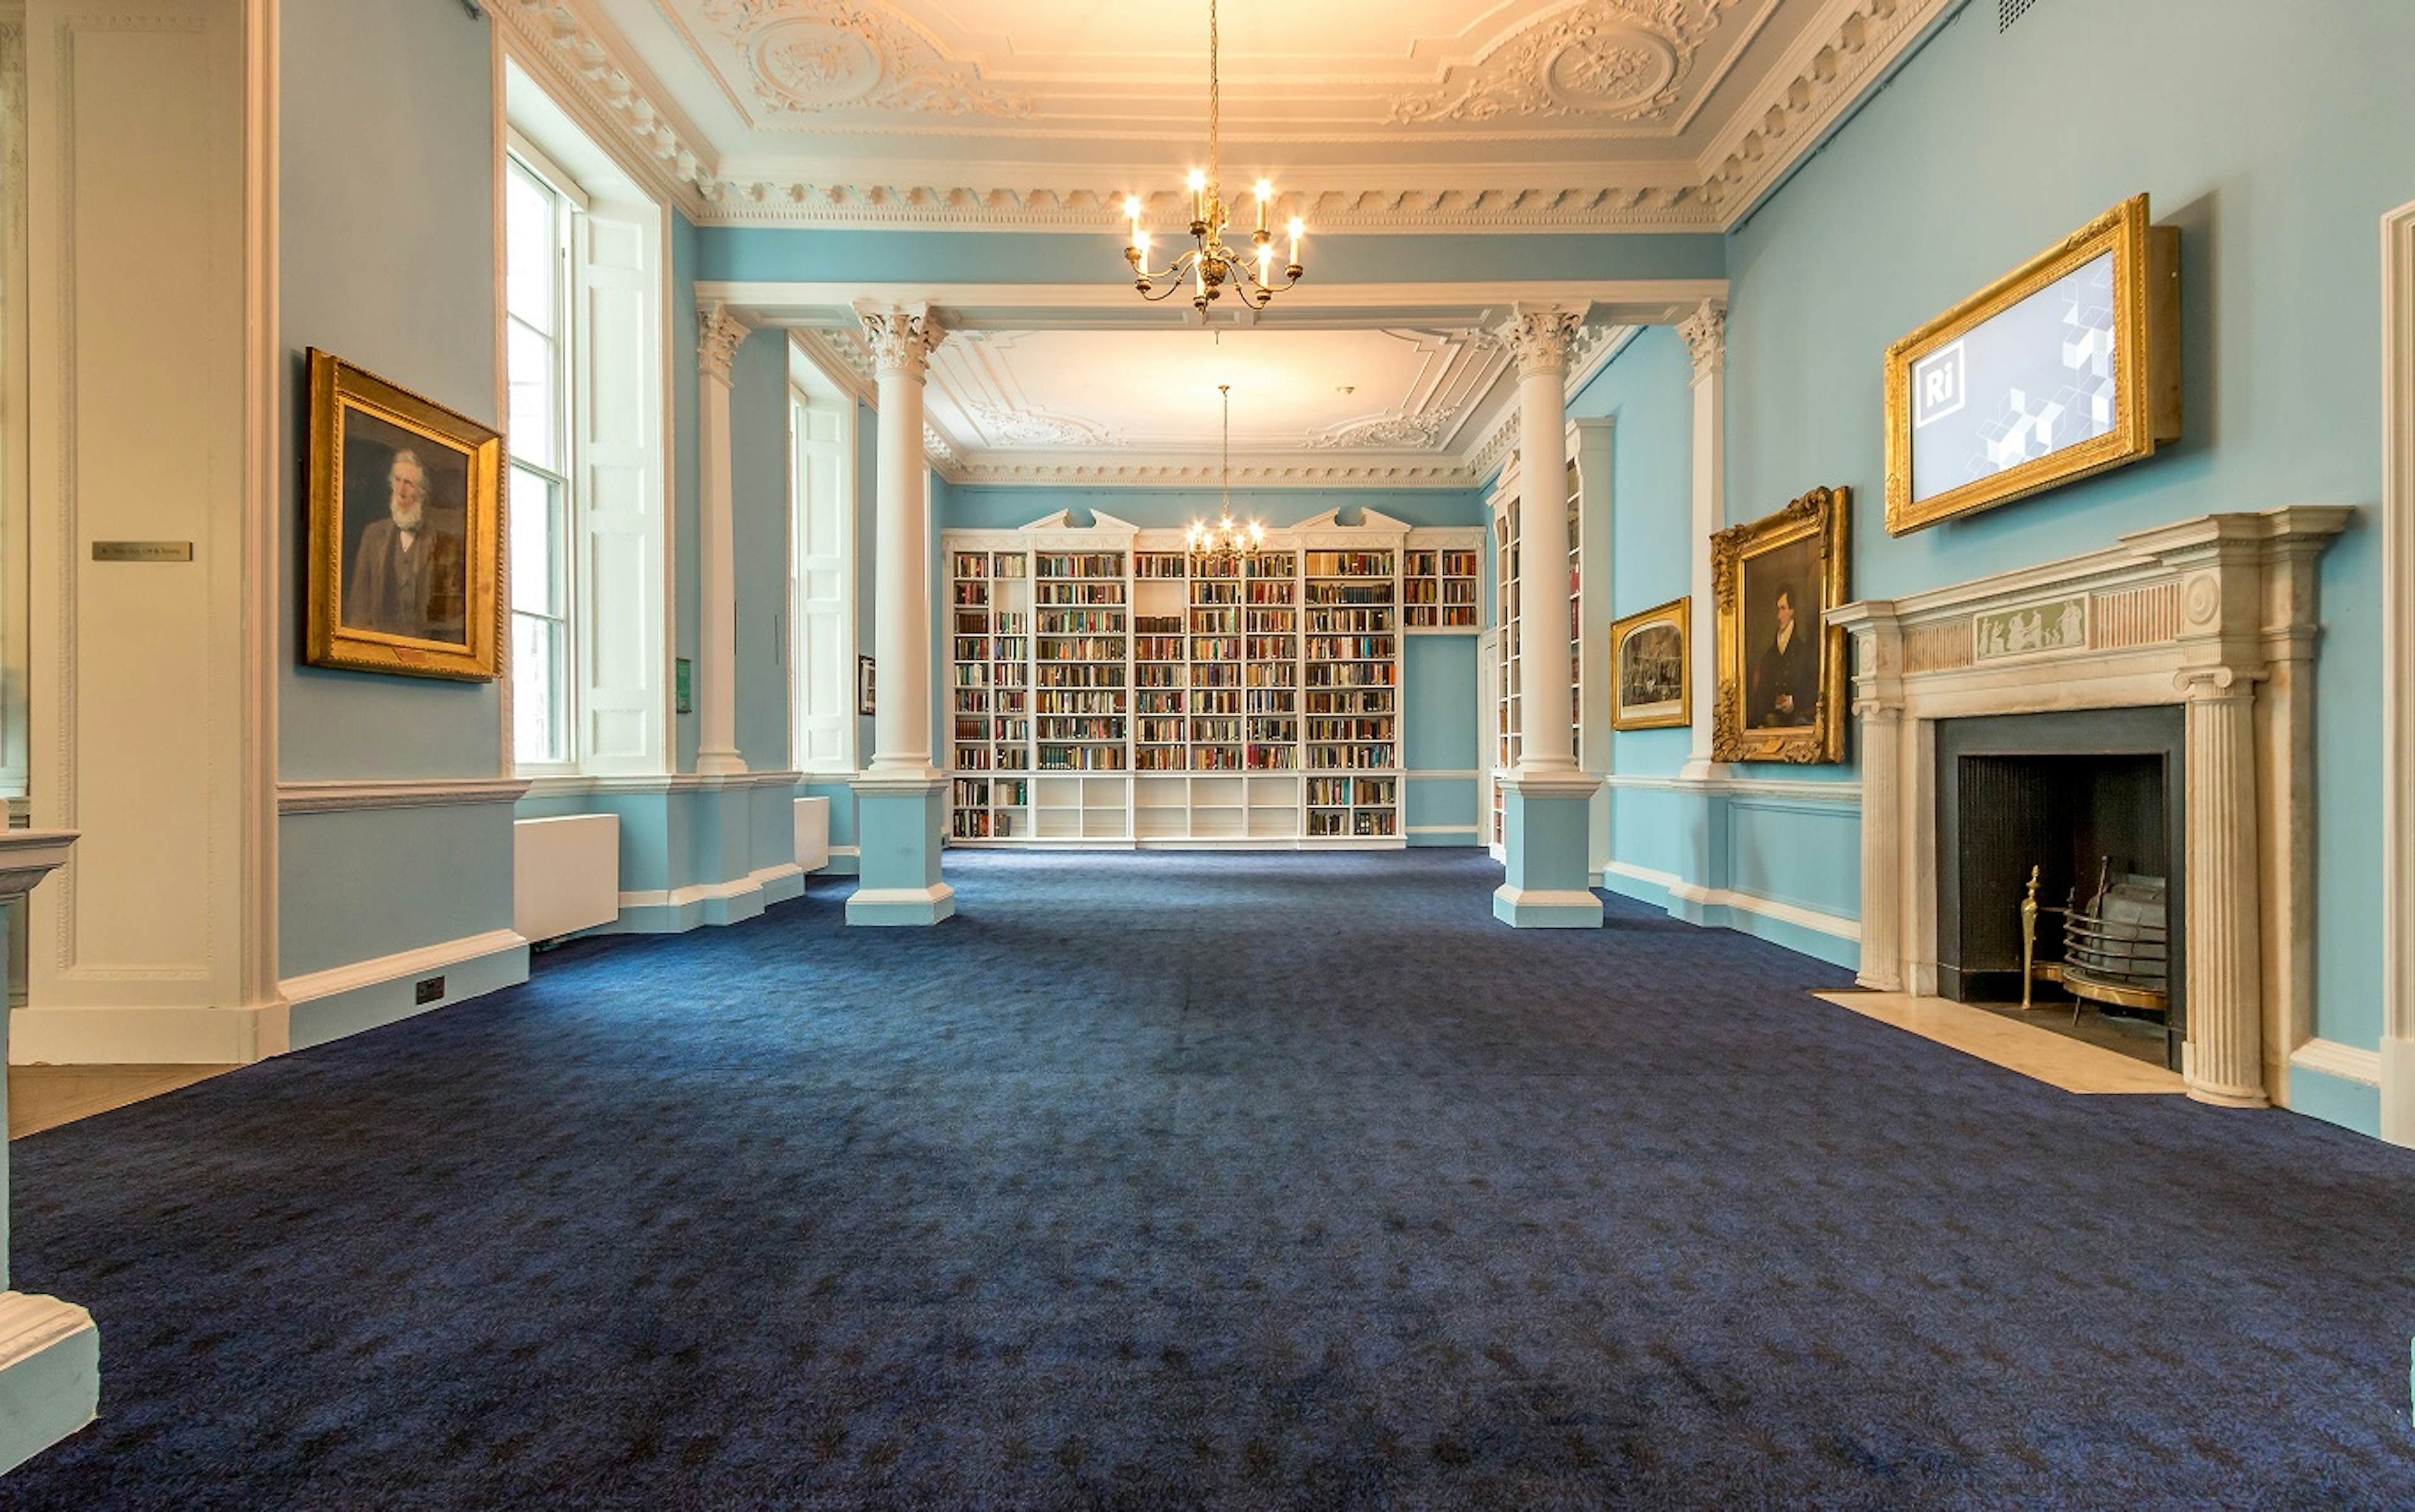 Royal Institution Venue - image 1